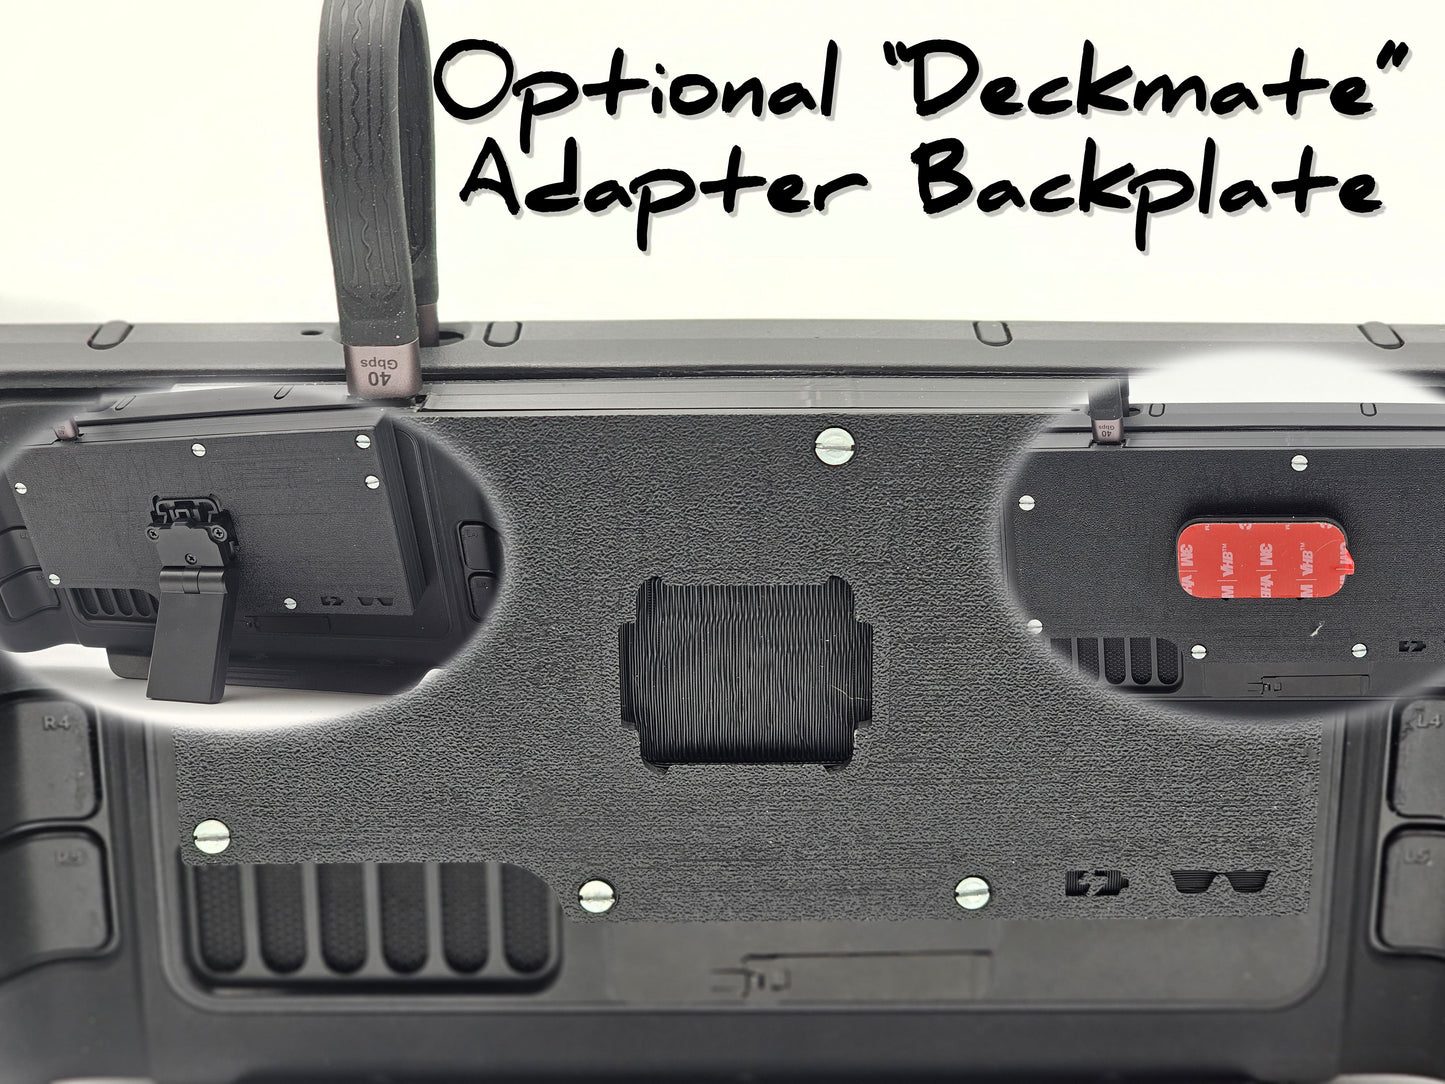 Soporte adaptador Steam Deck Redmagic: opciones para múltiples casos